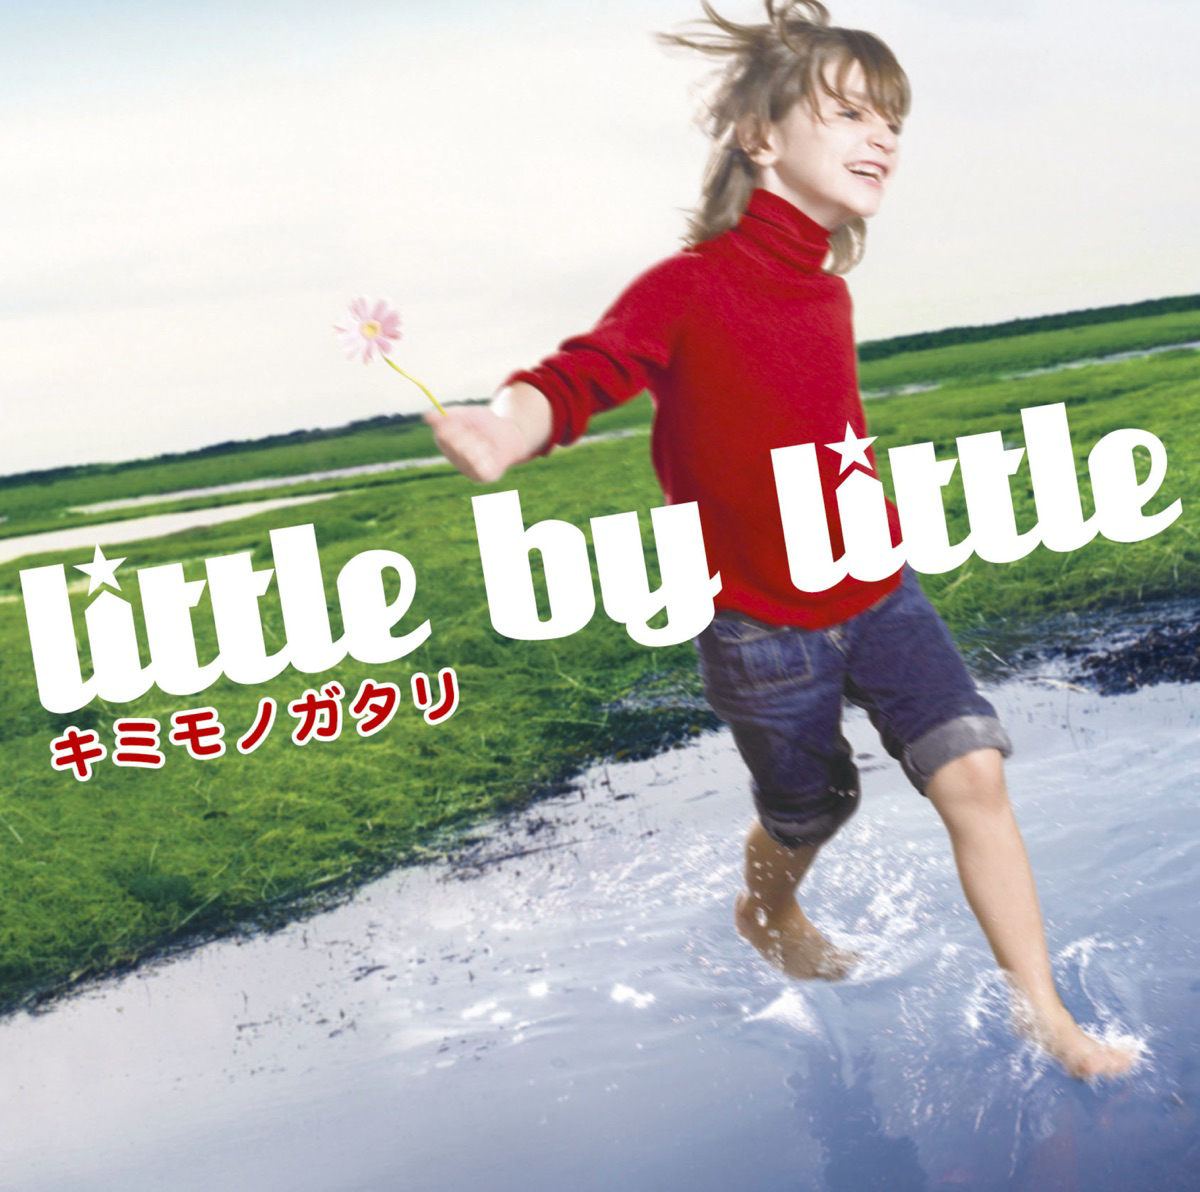 Little by Little - Kimimonogatari Cover